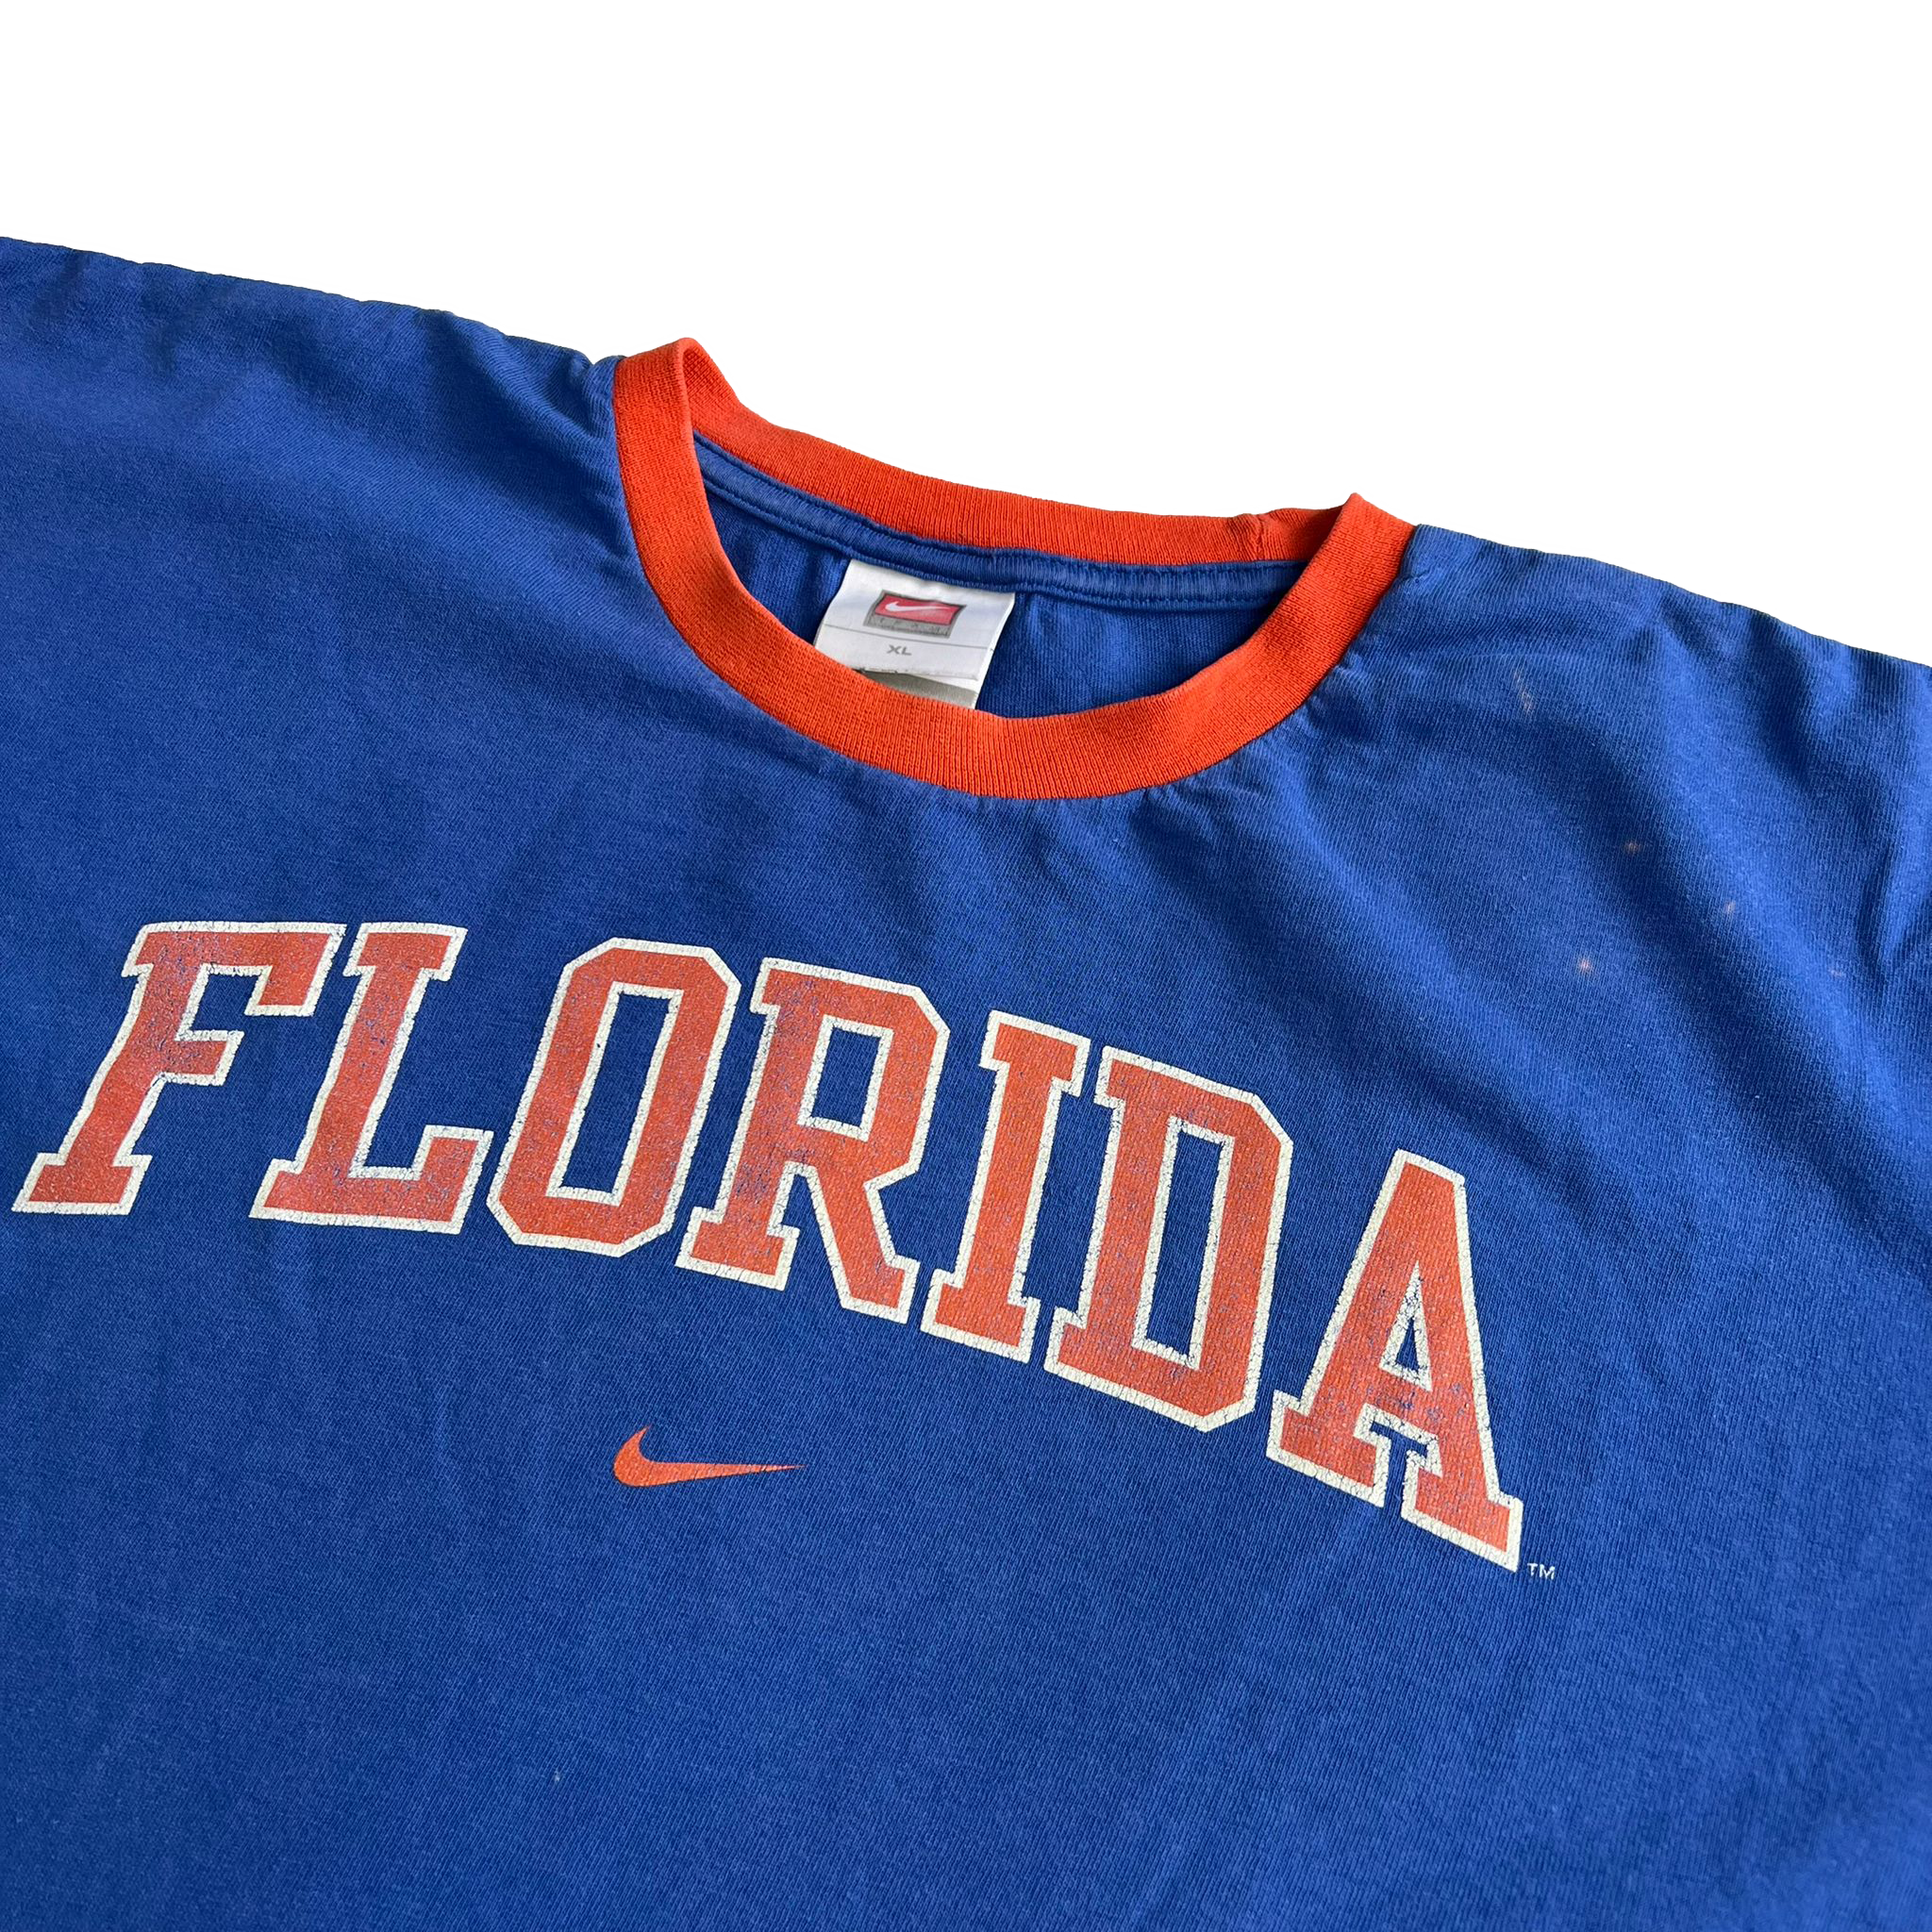 00's Nike Florida t-shirt